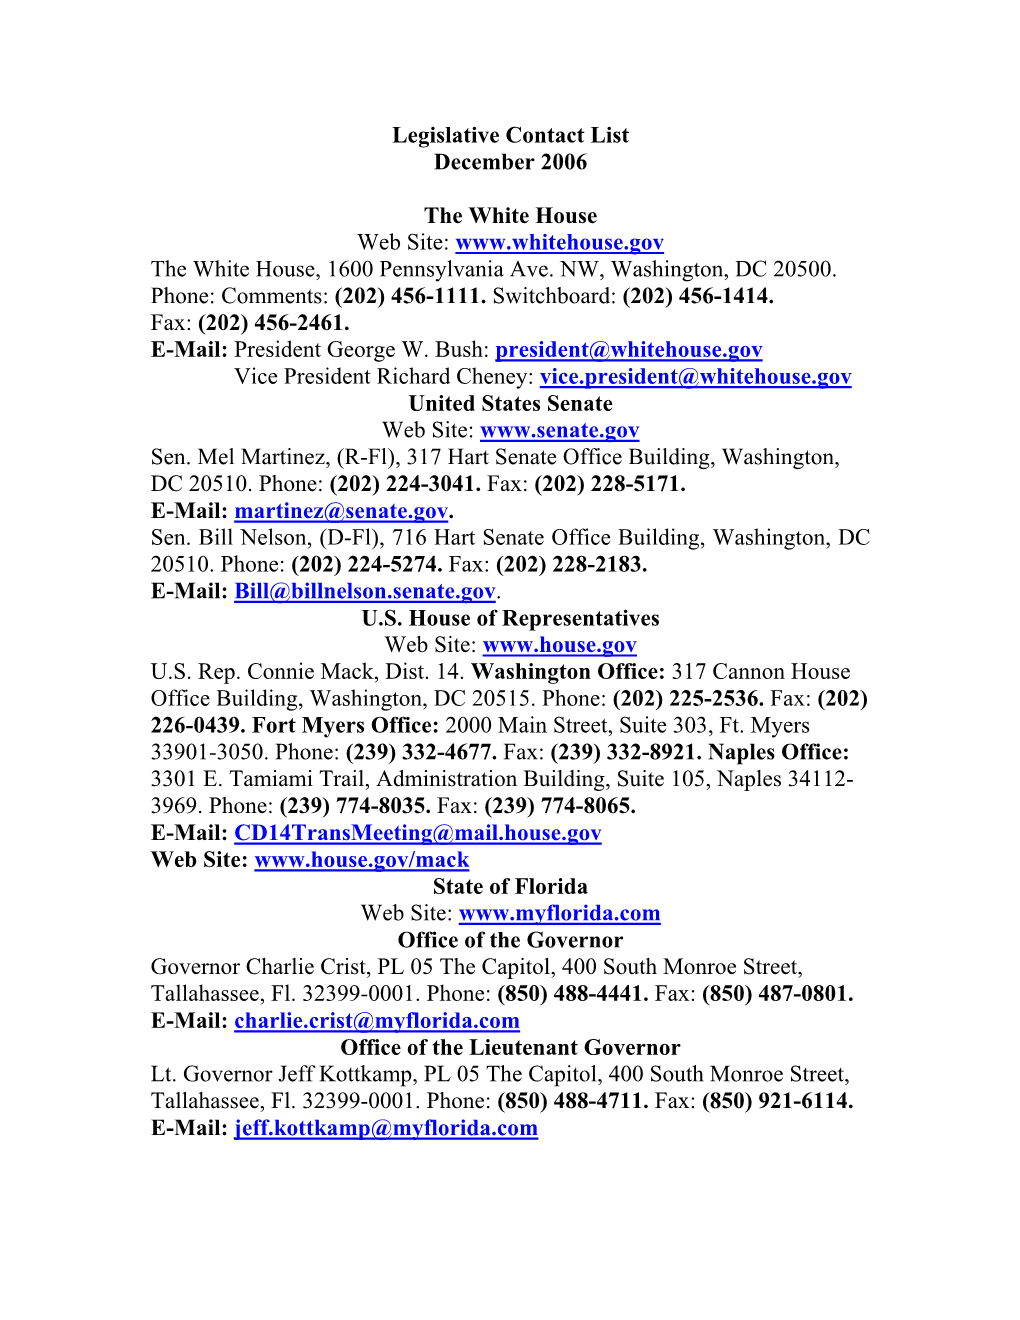 Legislative Contact List December 2006